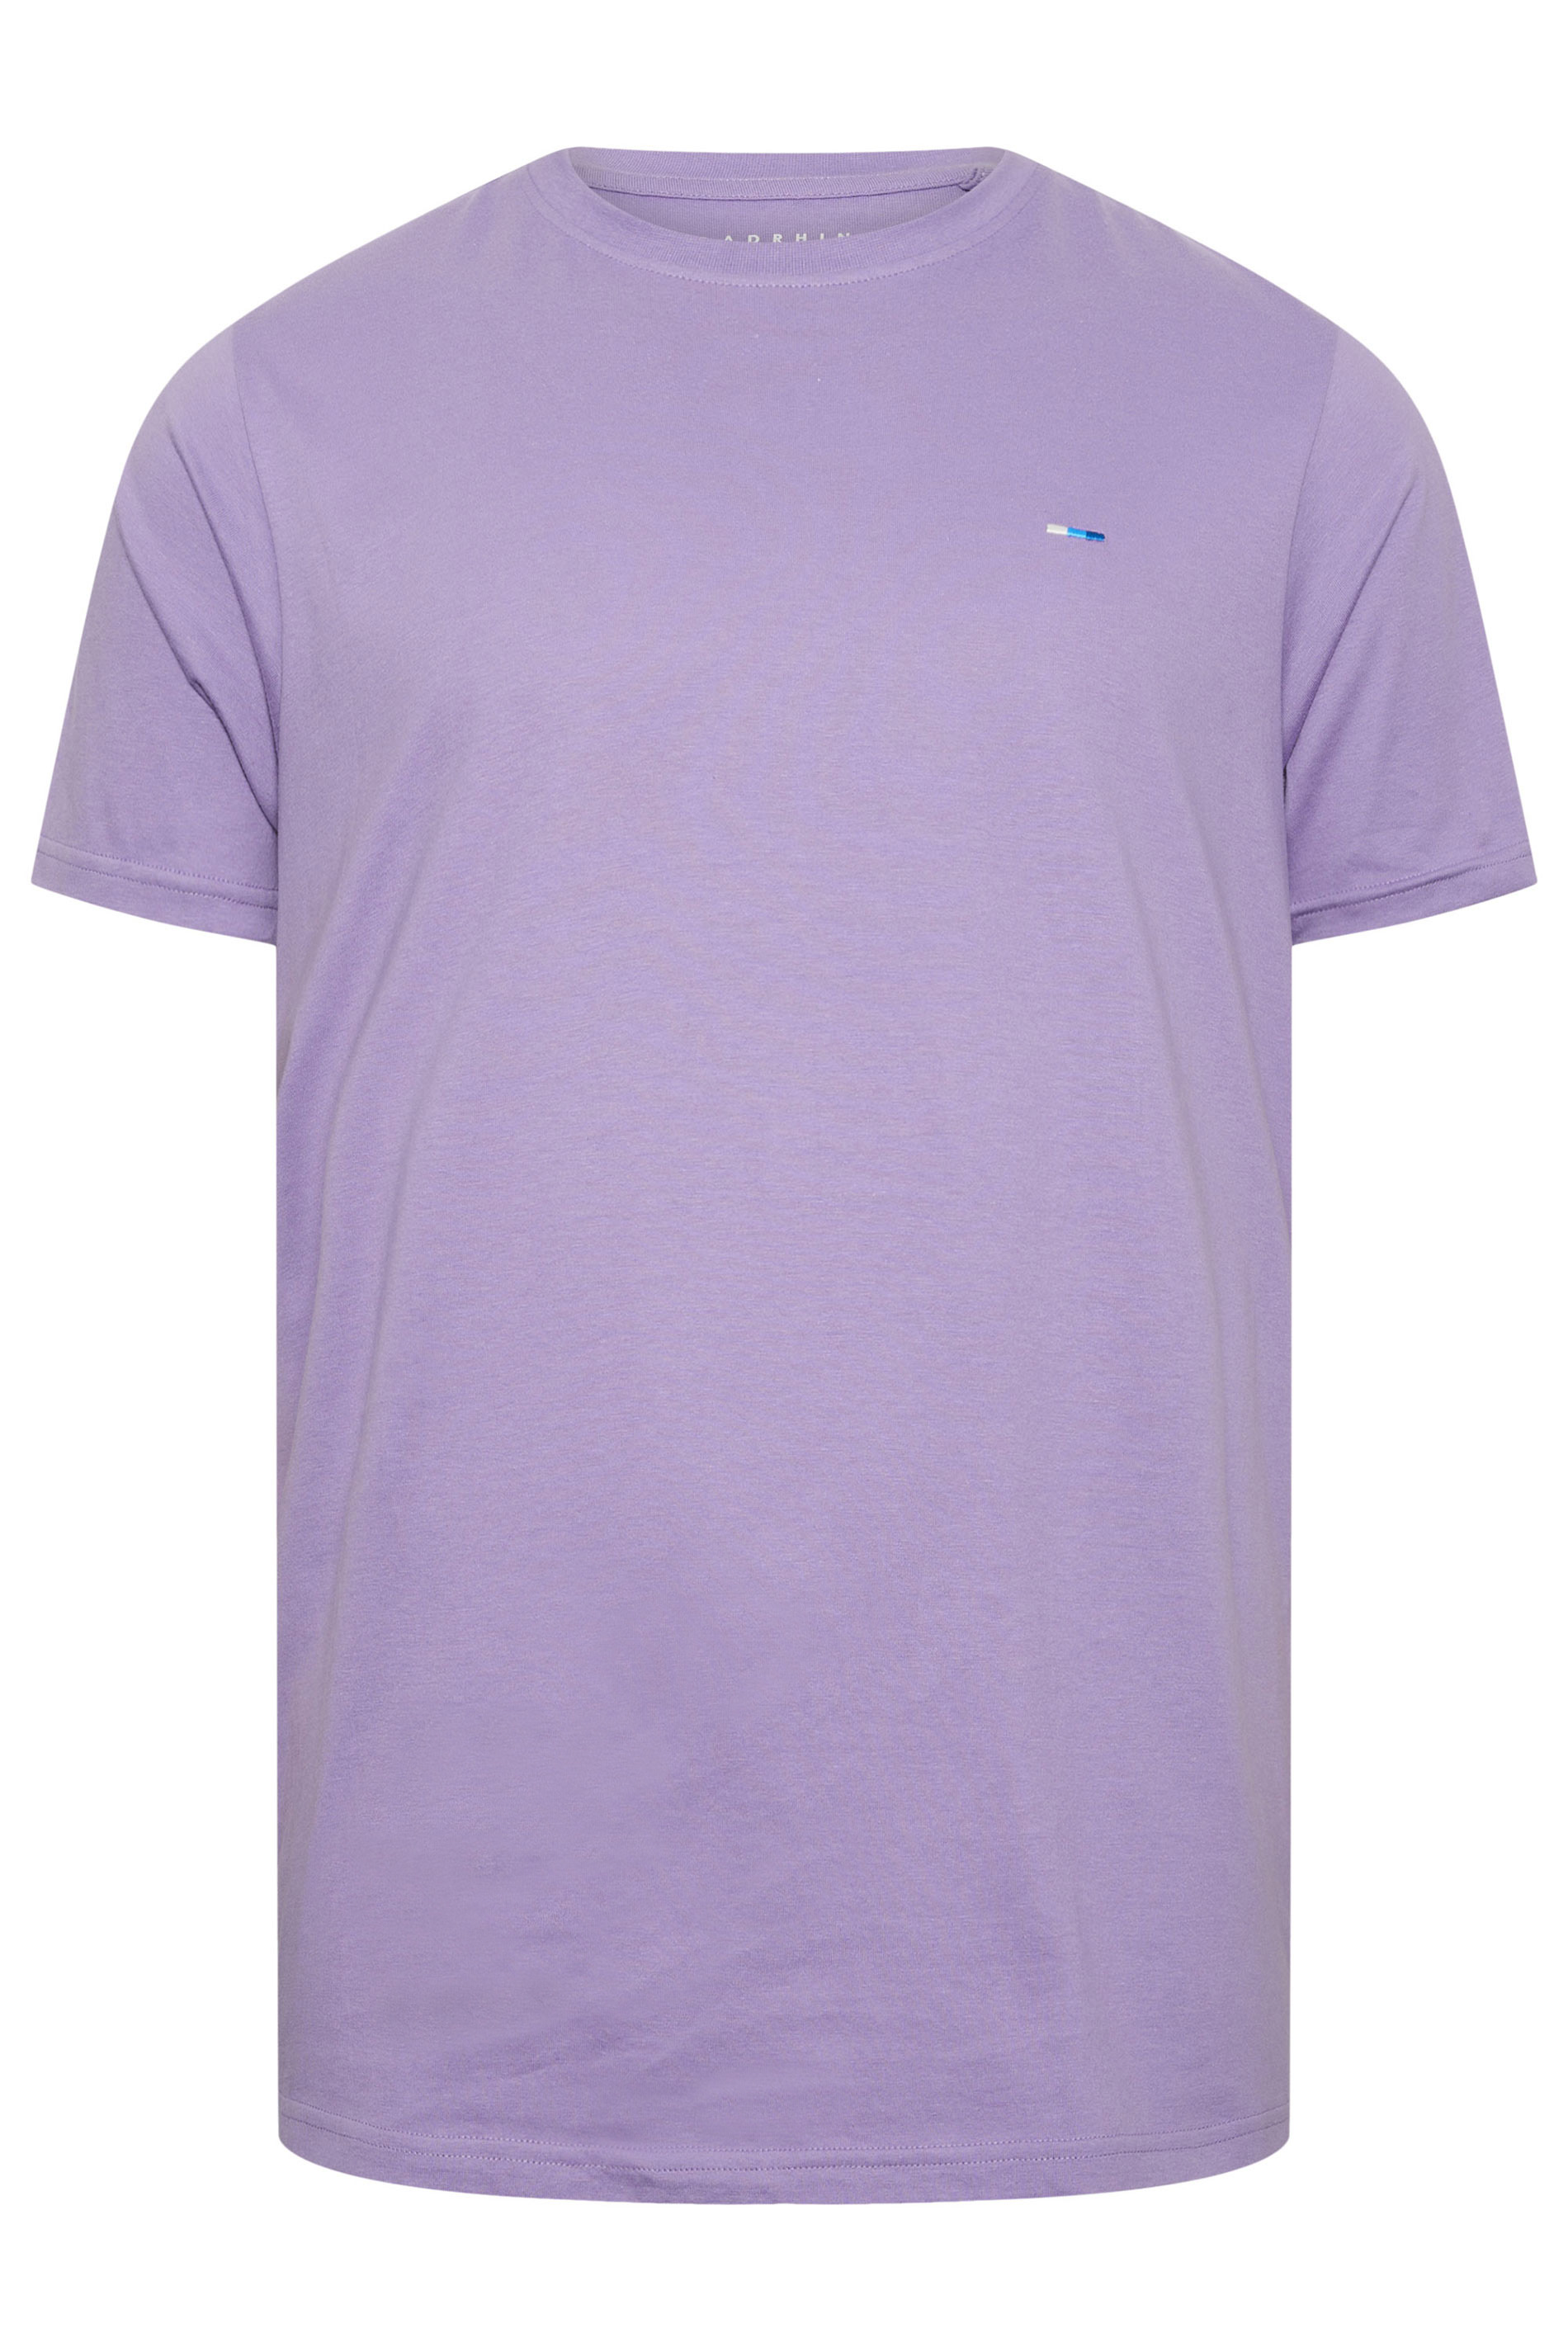 BadRhino Big & Tall Chalk Violet Purple Core T-Shirt | BadRhino 2